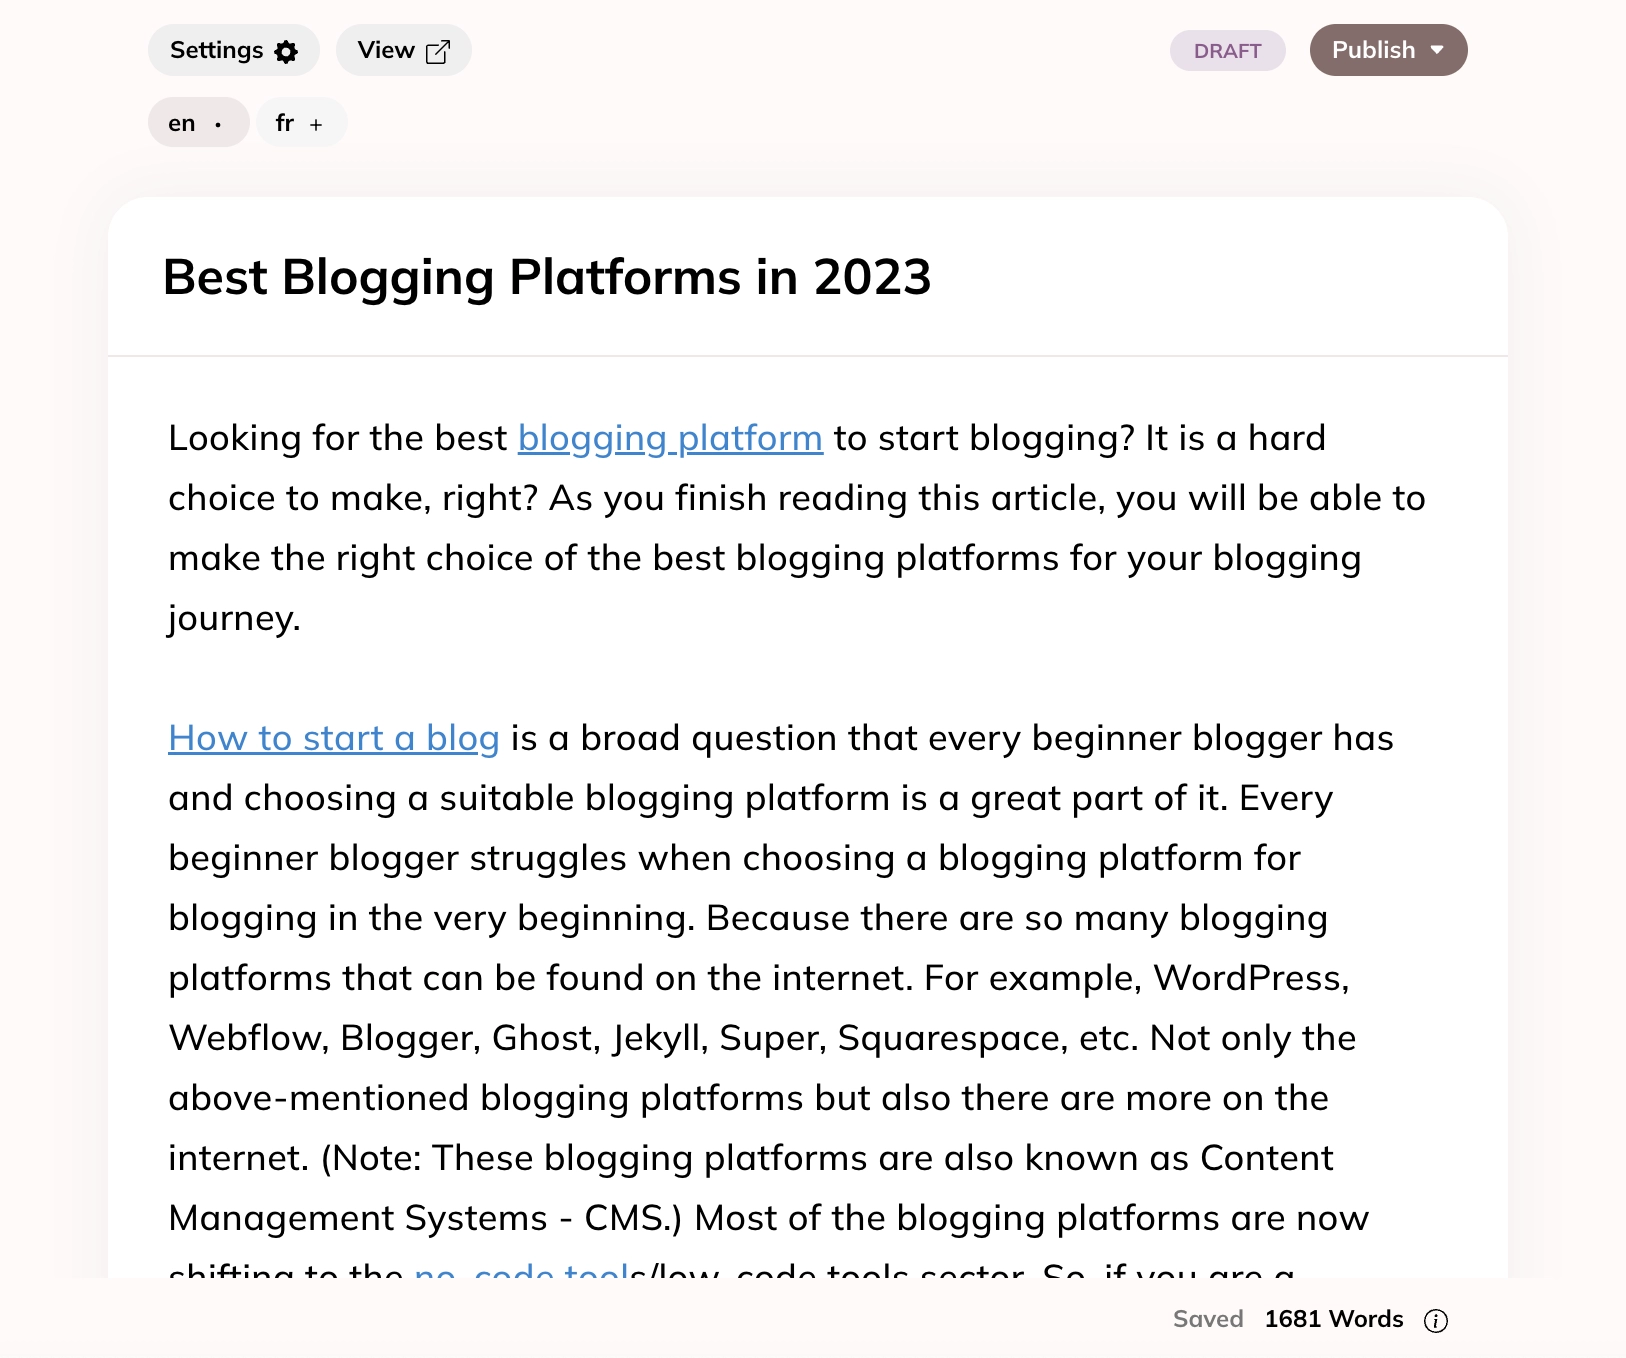 Hyvor Blogs’ editor